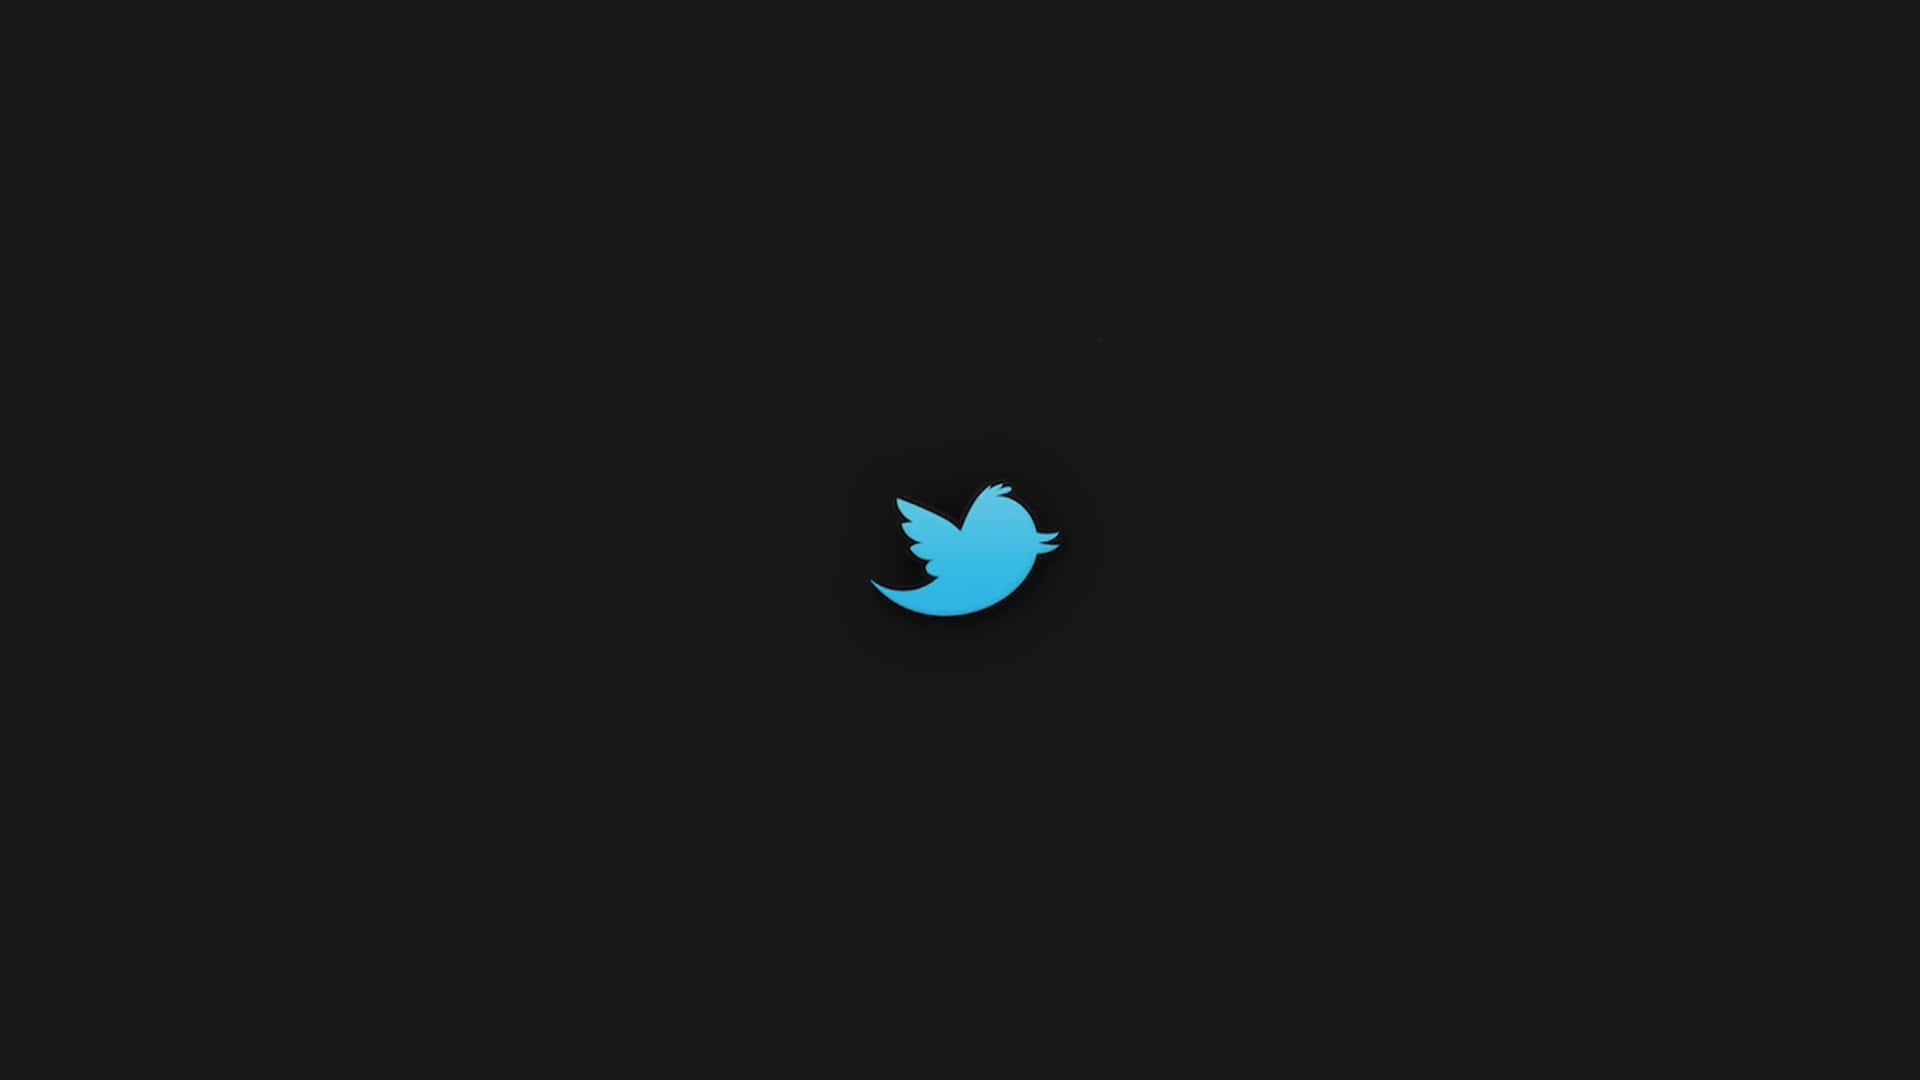 twitter logo black background